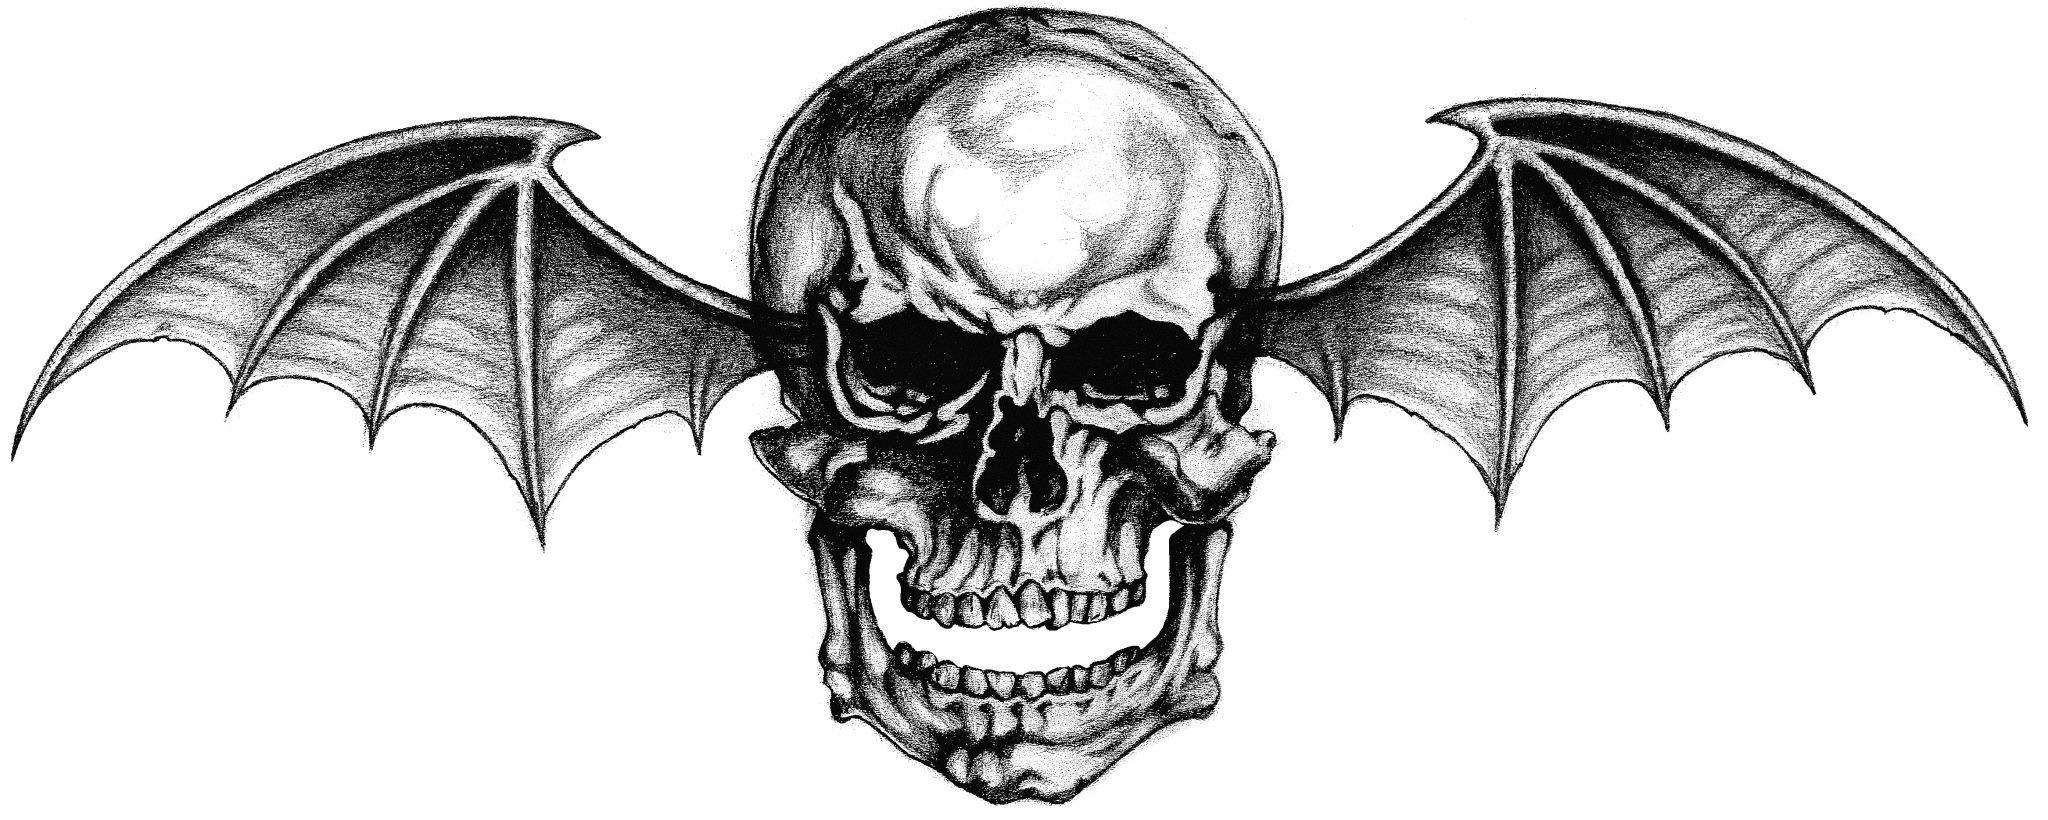 Rev Death Bat Logo - Avenged Sevenfold deathbat logo. For the soul. Tattoos, Avenged